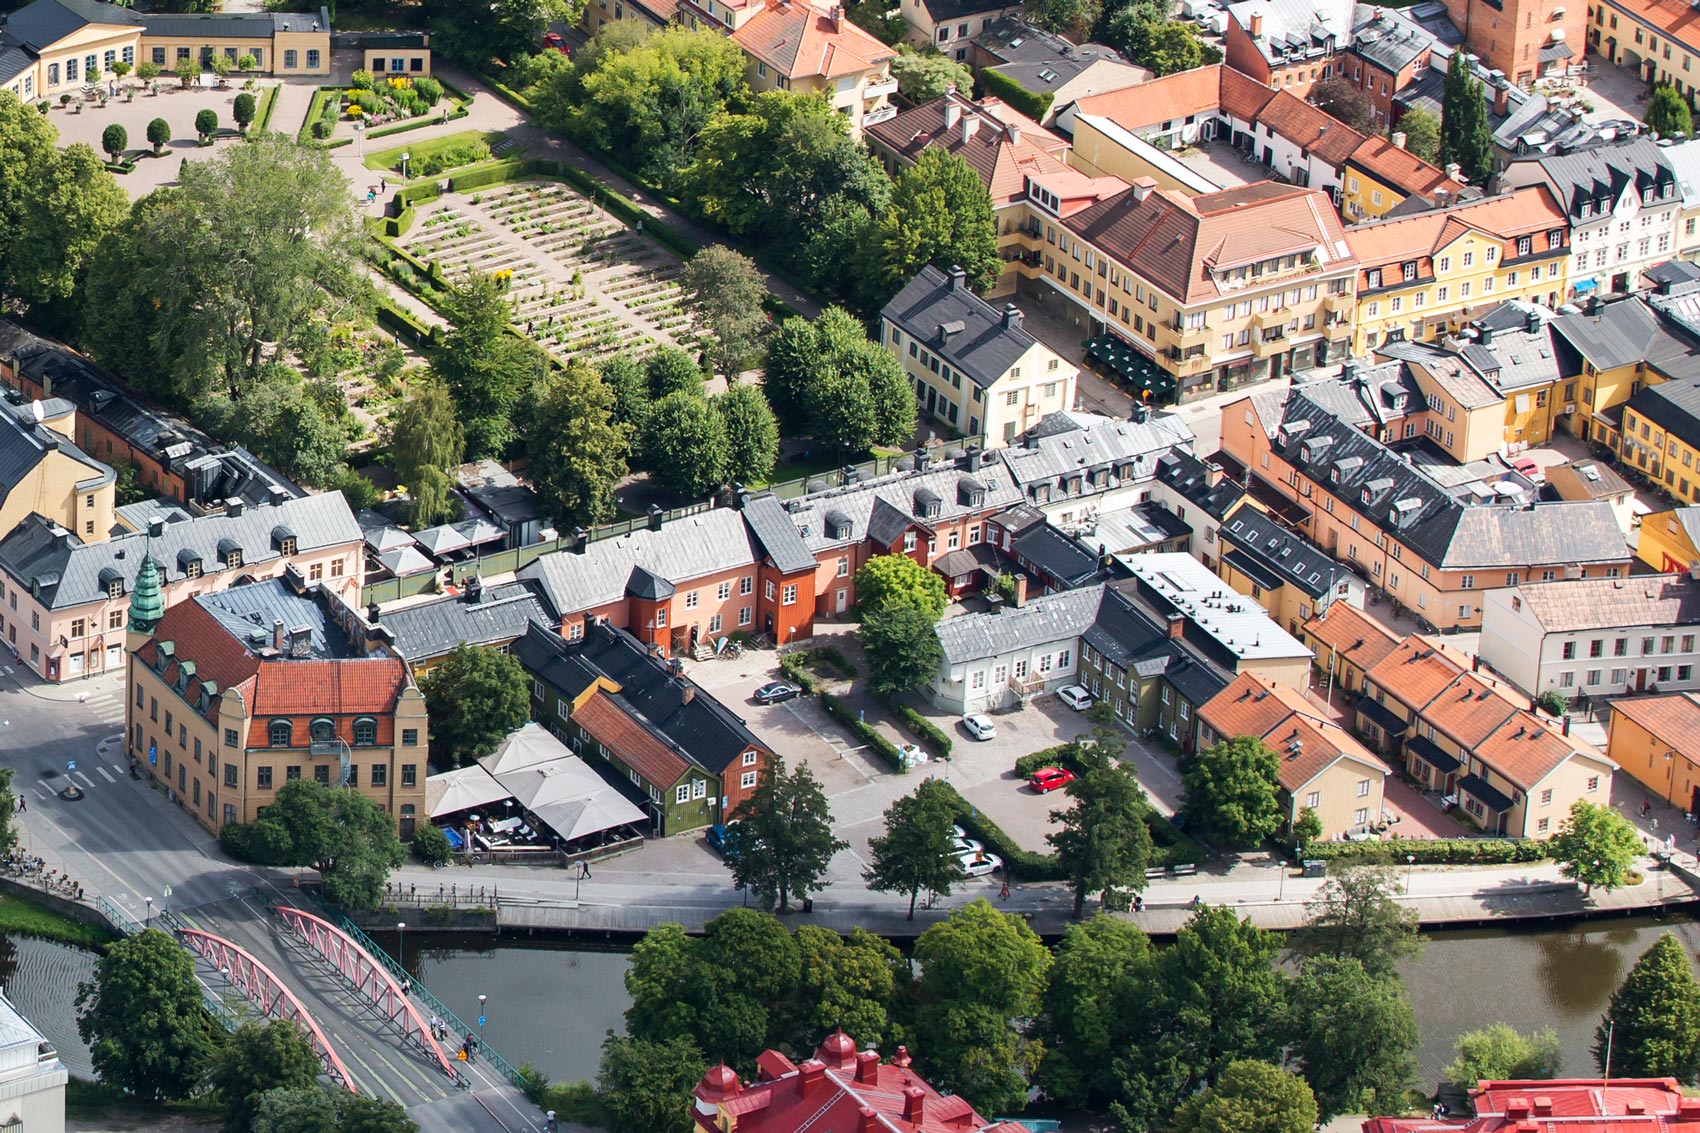 Karamellfabriken - Uppsala